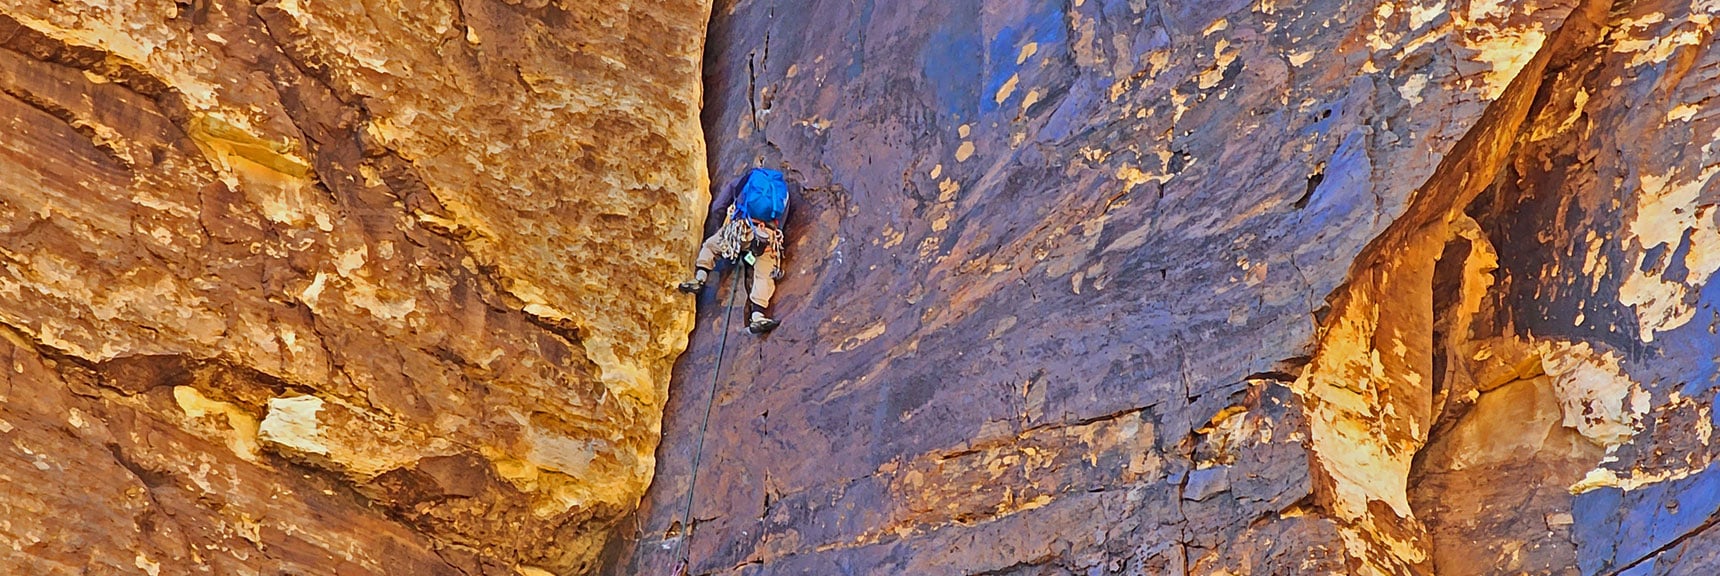 Cracks Afford Good Climbing Routes. | Rock Climber Observations | Pine Creek Canyon | Rainbow Mountain Wilderness, Nevada